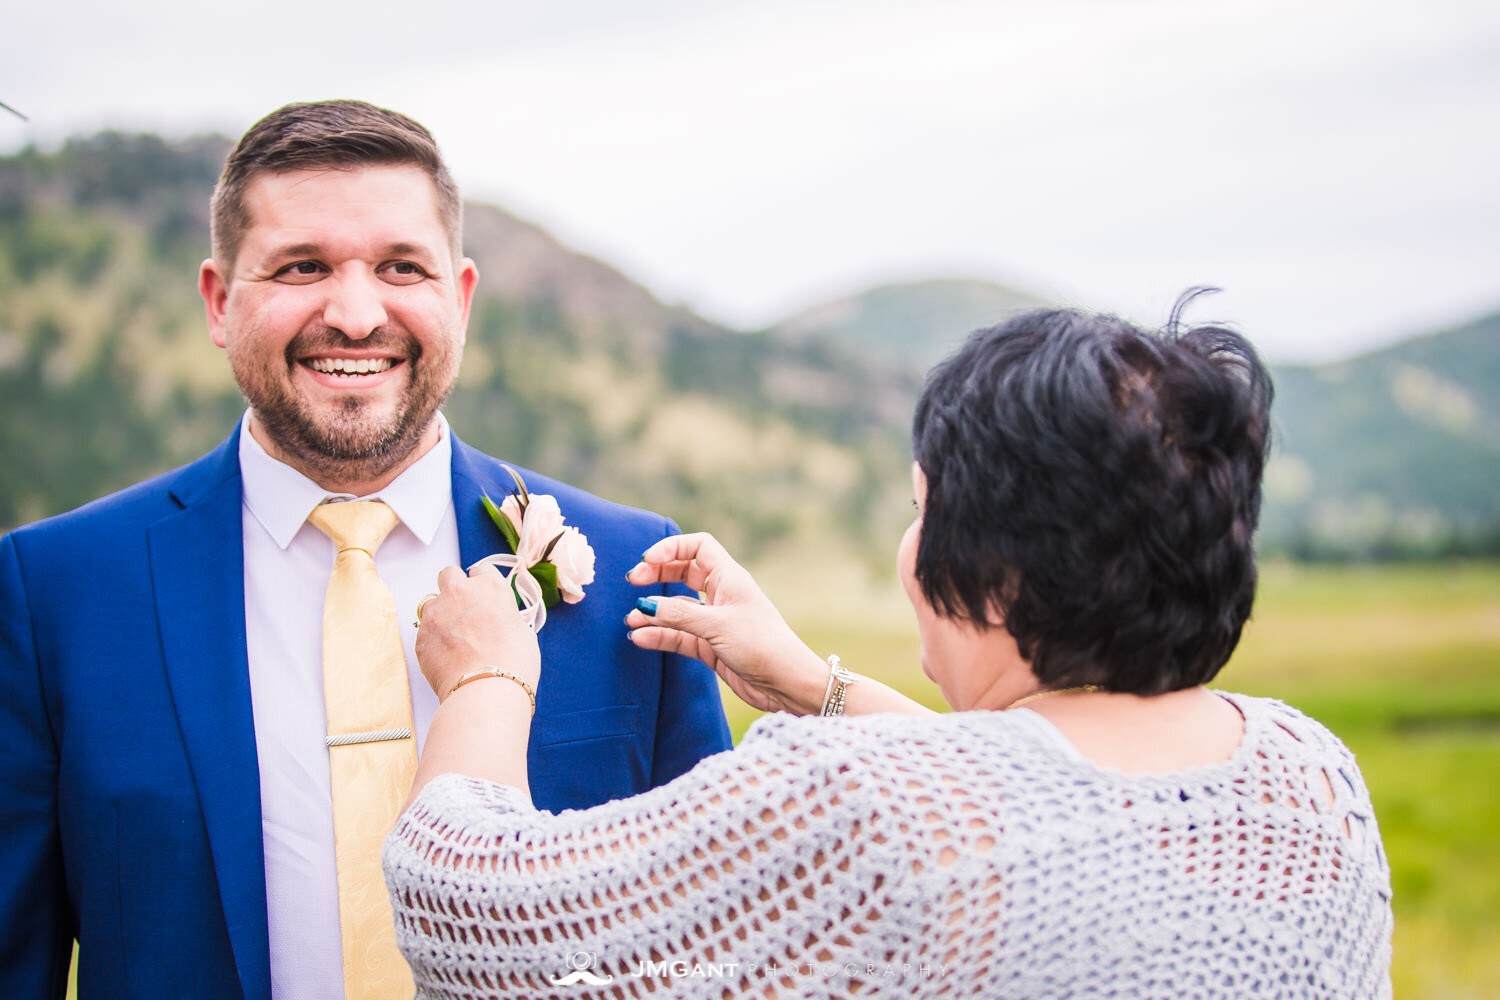  Summer elopement in
Rocky Mountain National Park
© JMGant Photography
http://www.jmgantphotography.com/ 